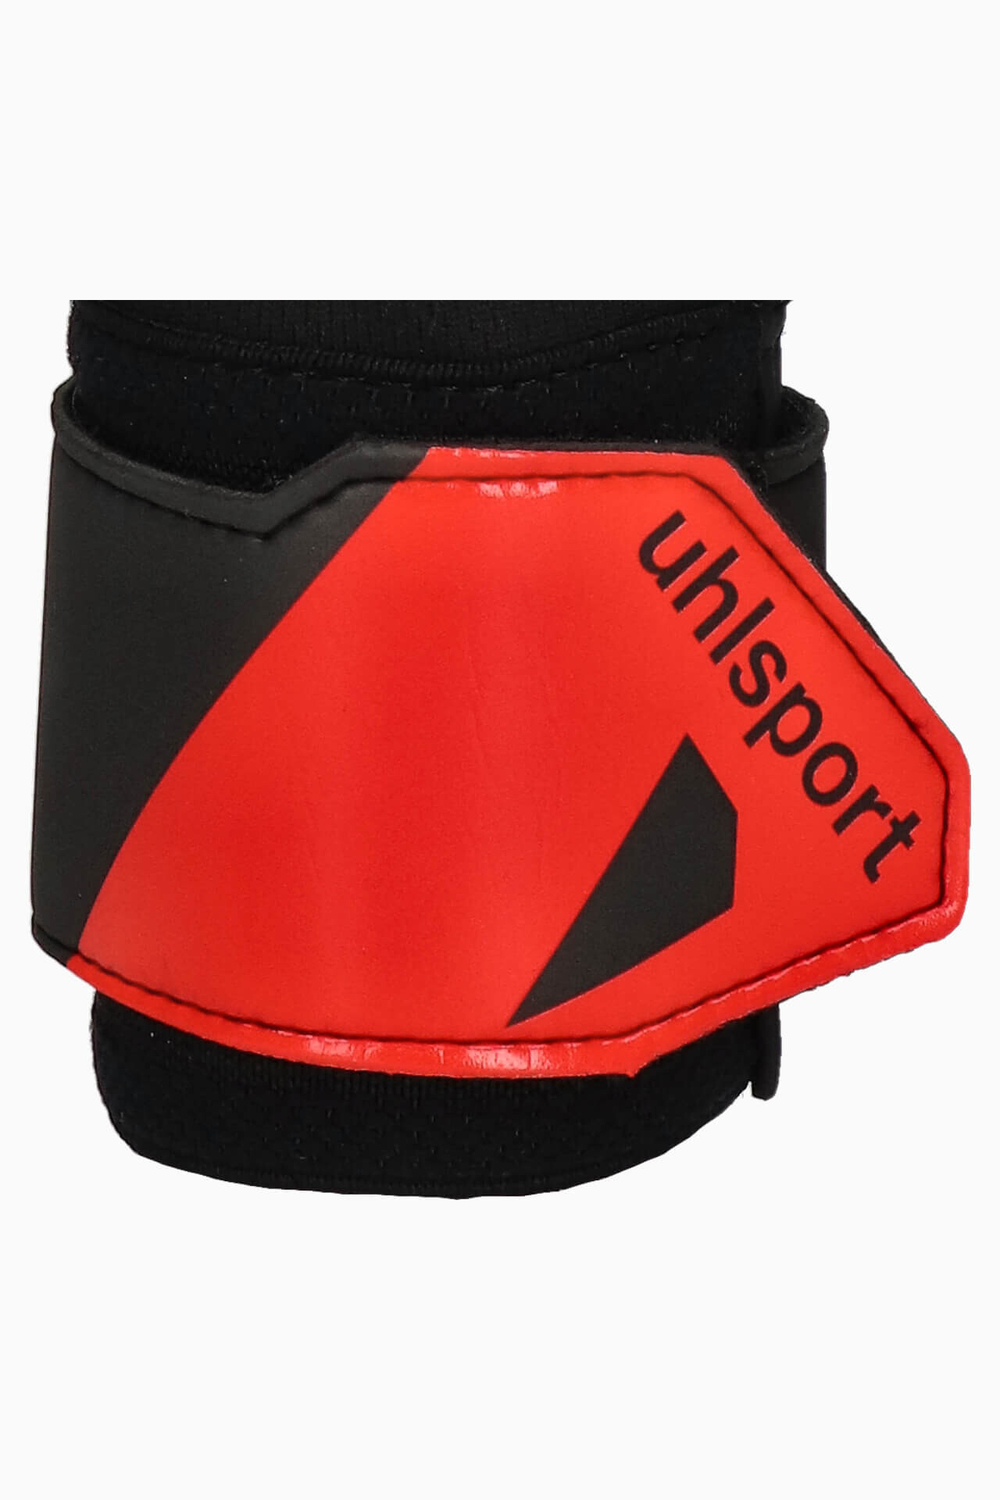 Вратарские перчатки Uhlsport Powerline Soft Flex Frame Junior